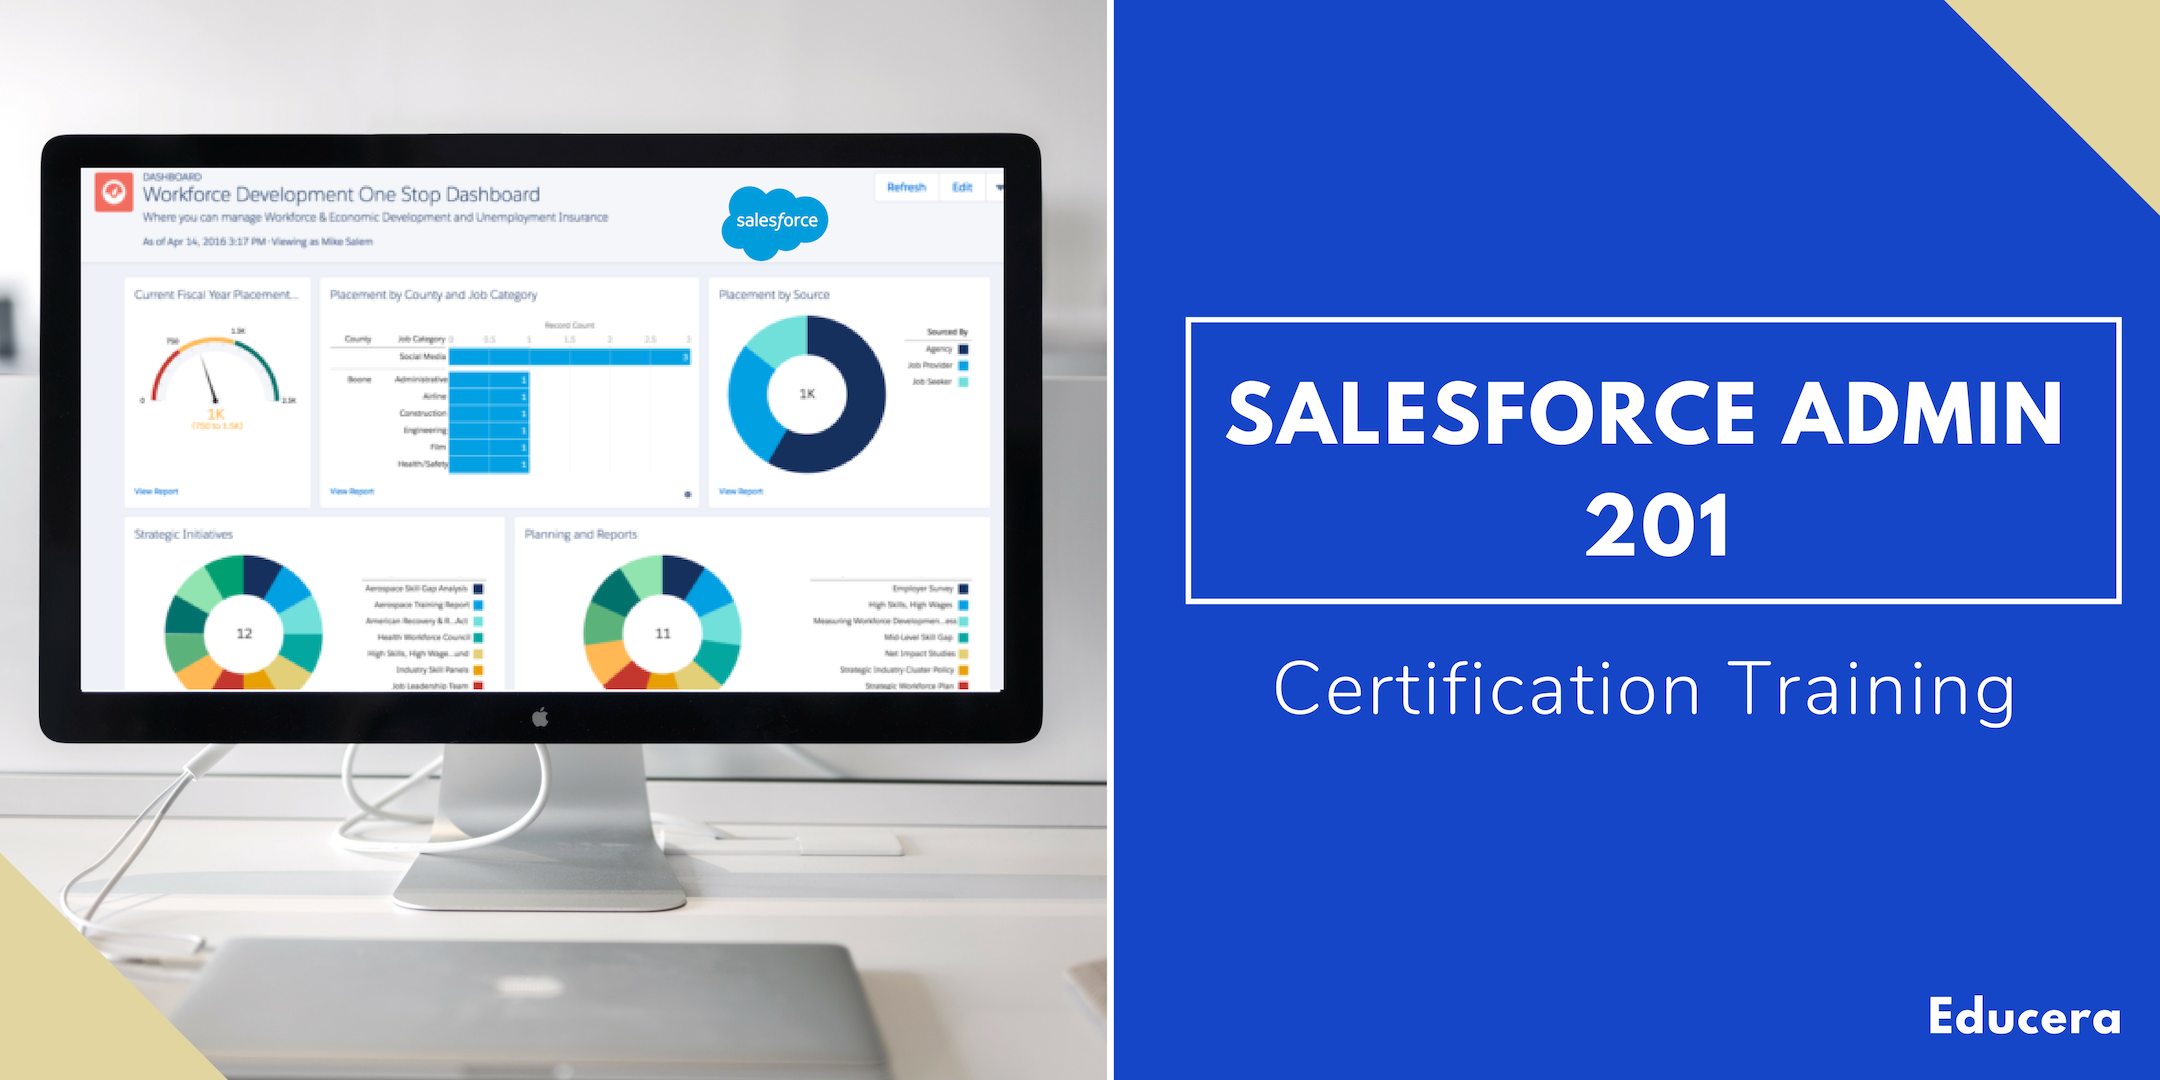 Salesforce Admin 201 & App Builder Certification Training in McAllen, TX 